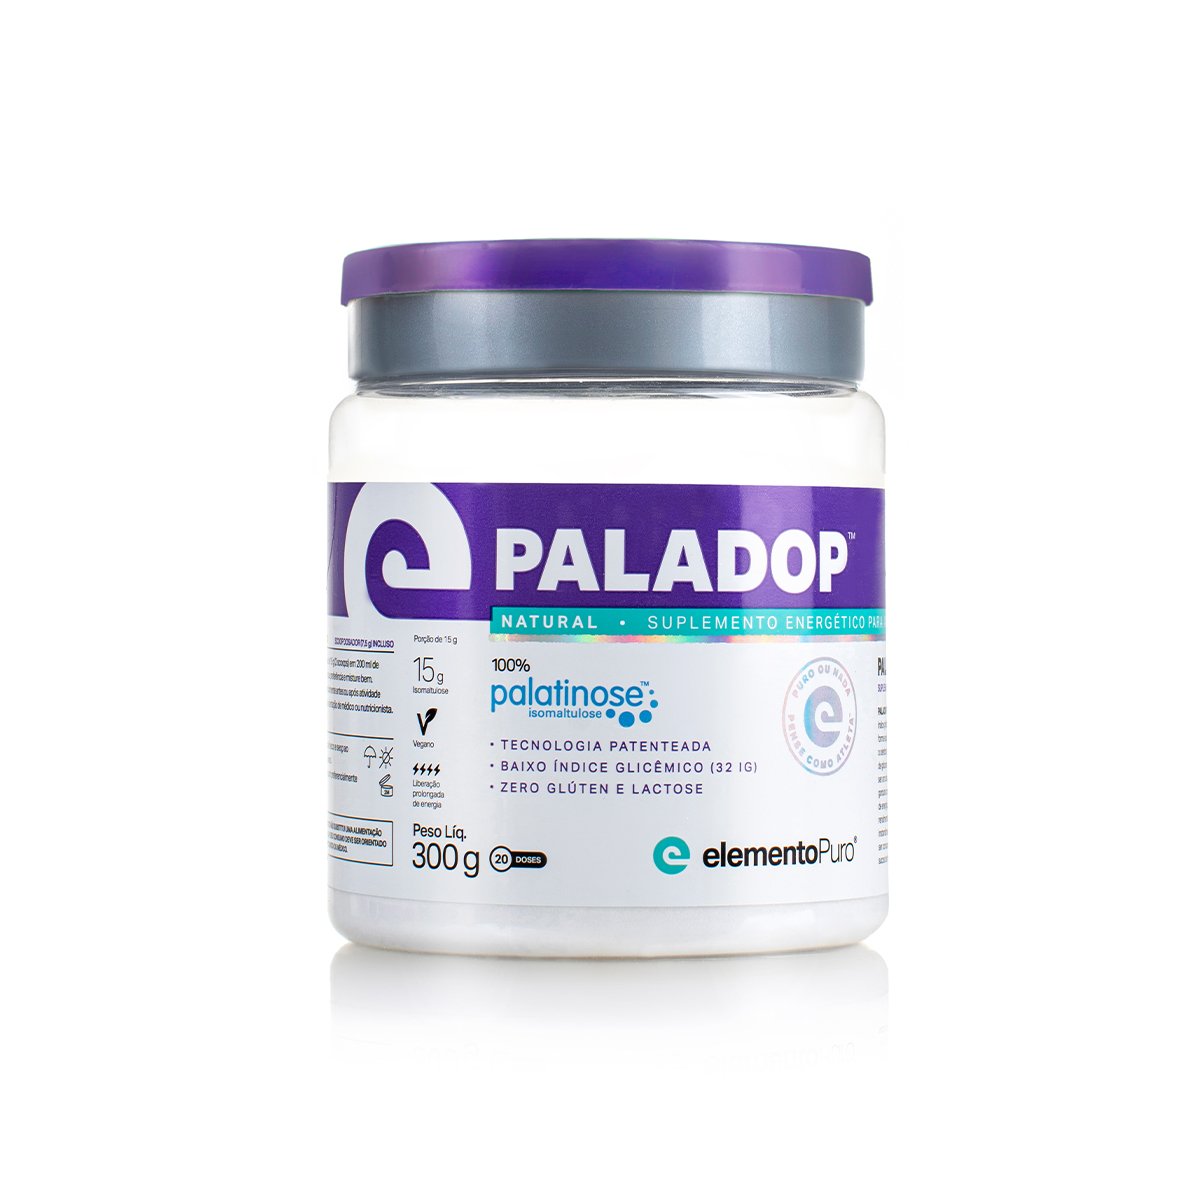 Palatinose Paladop - Elemento Puro (300g)